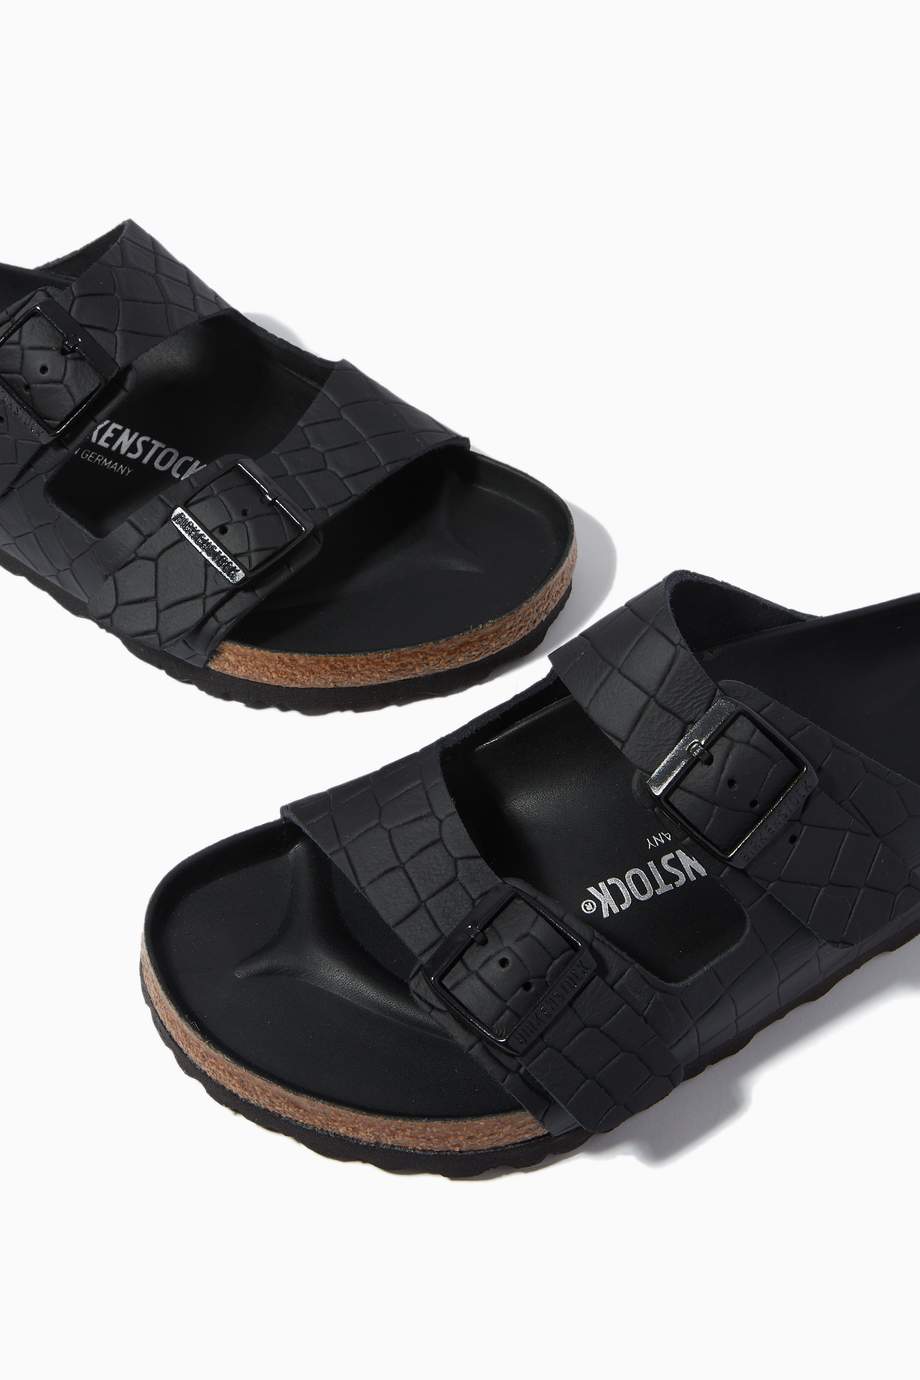 Shop Birkenstock Black Arizona Sandals in Croc Embossed Natural Leather ...